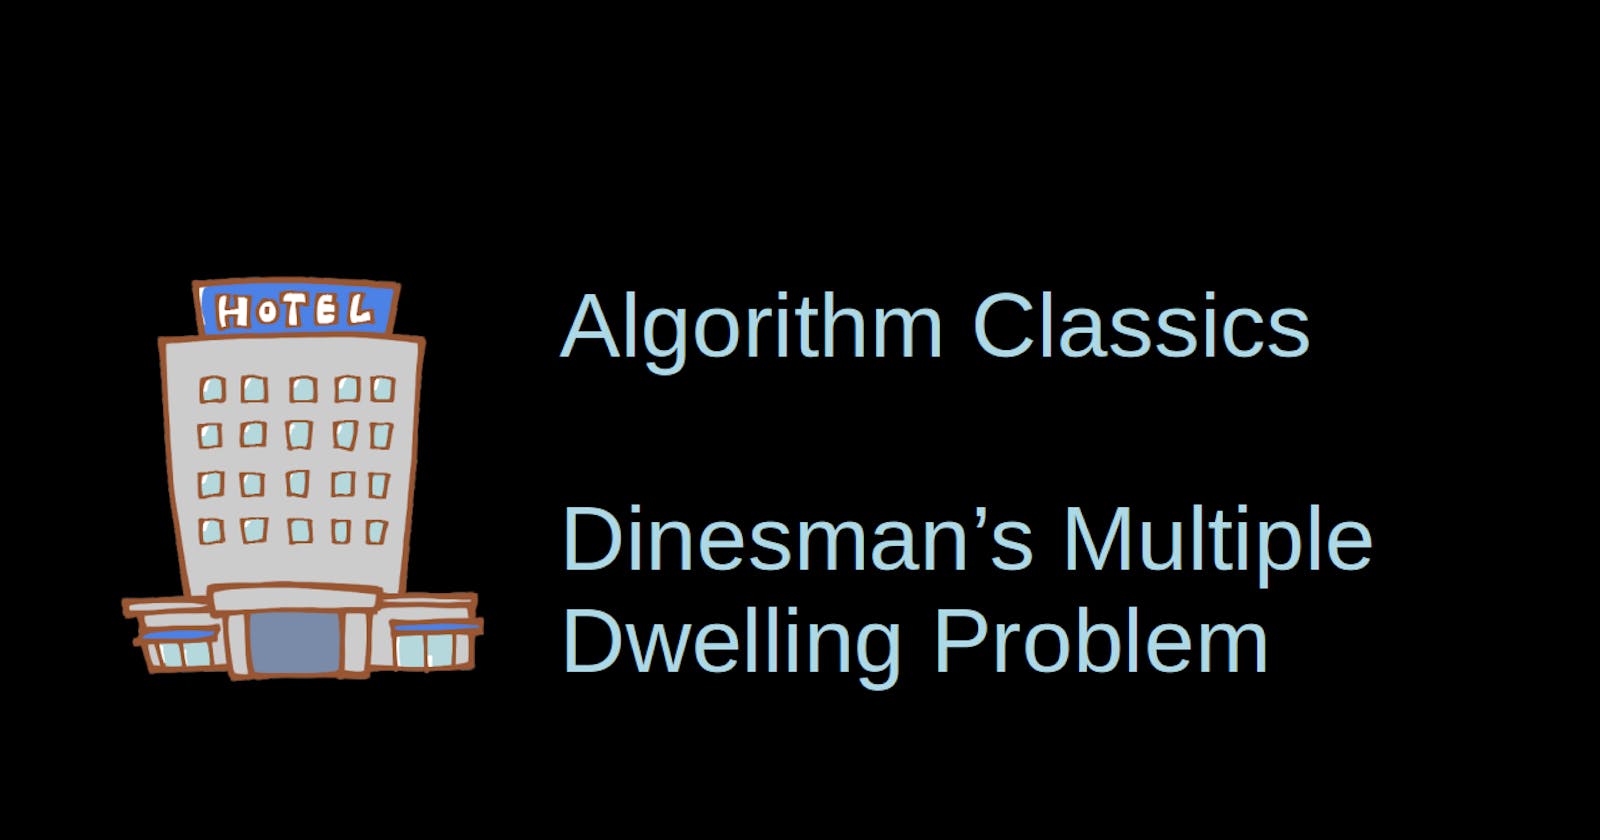 Dinesman's Multiple Dwelling Problem